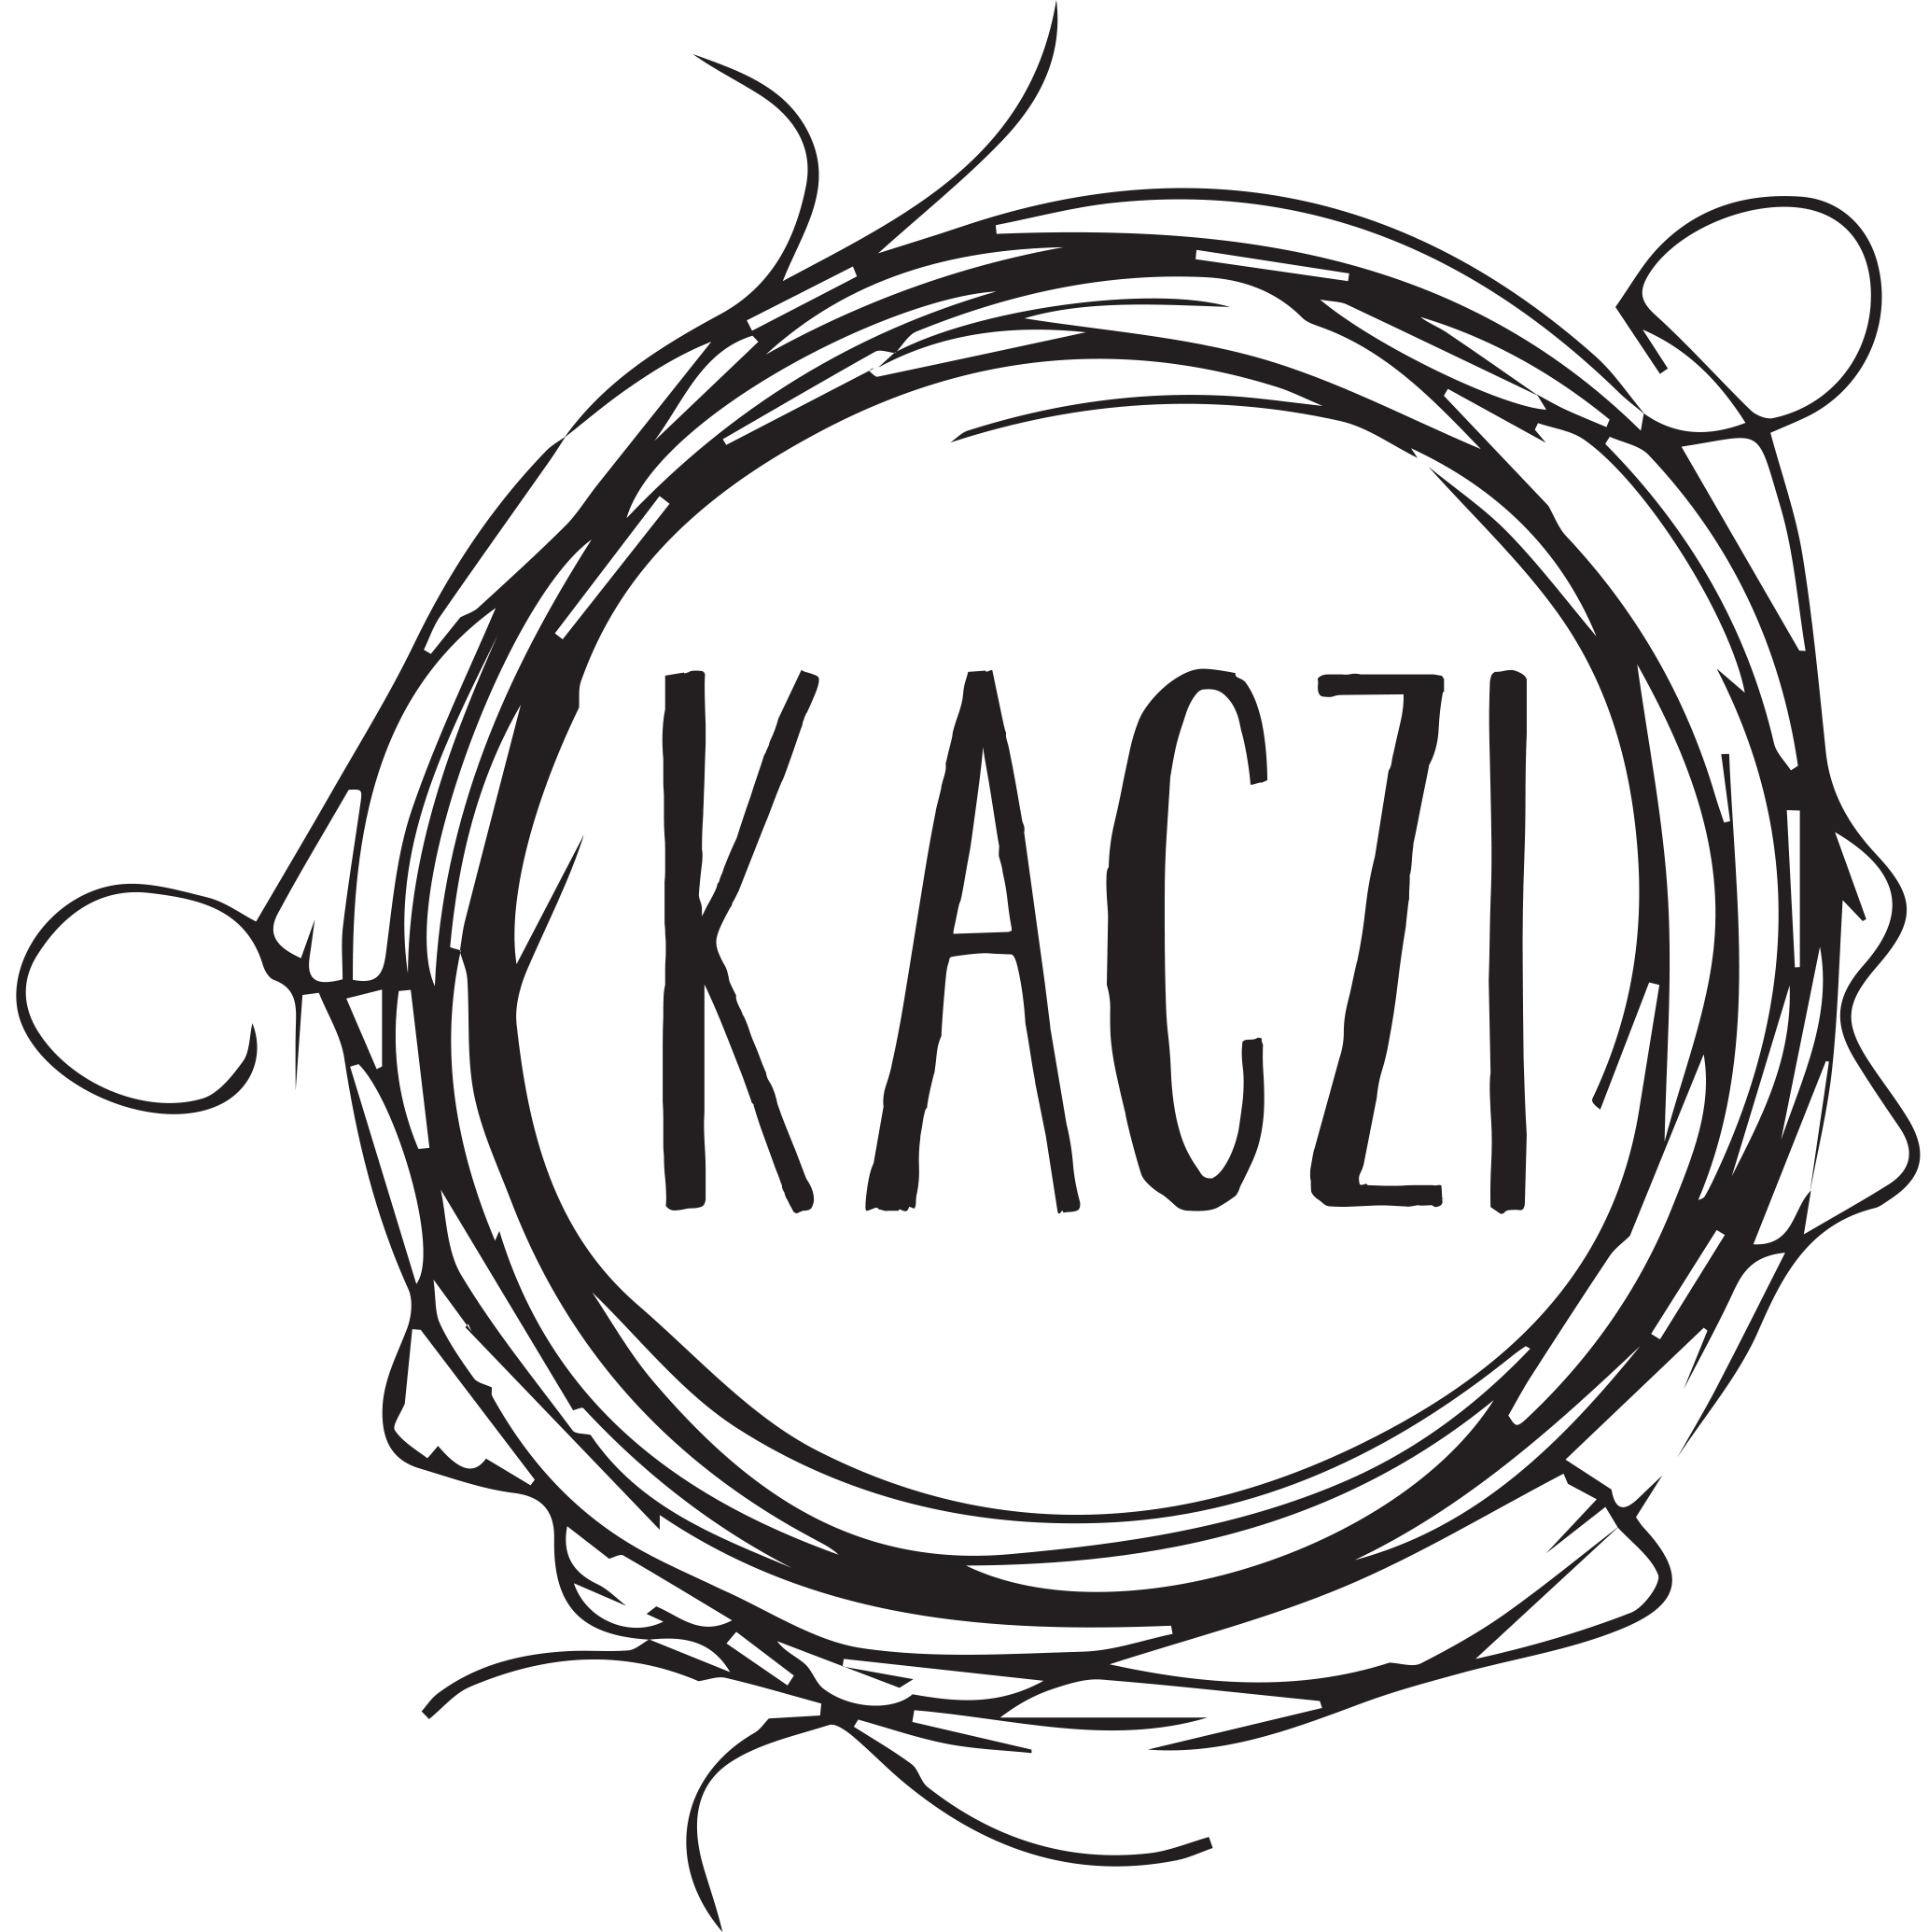 LogoKACZI.png